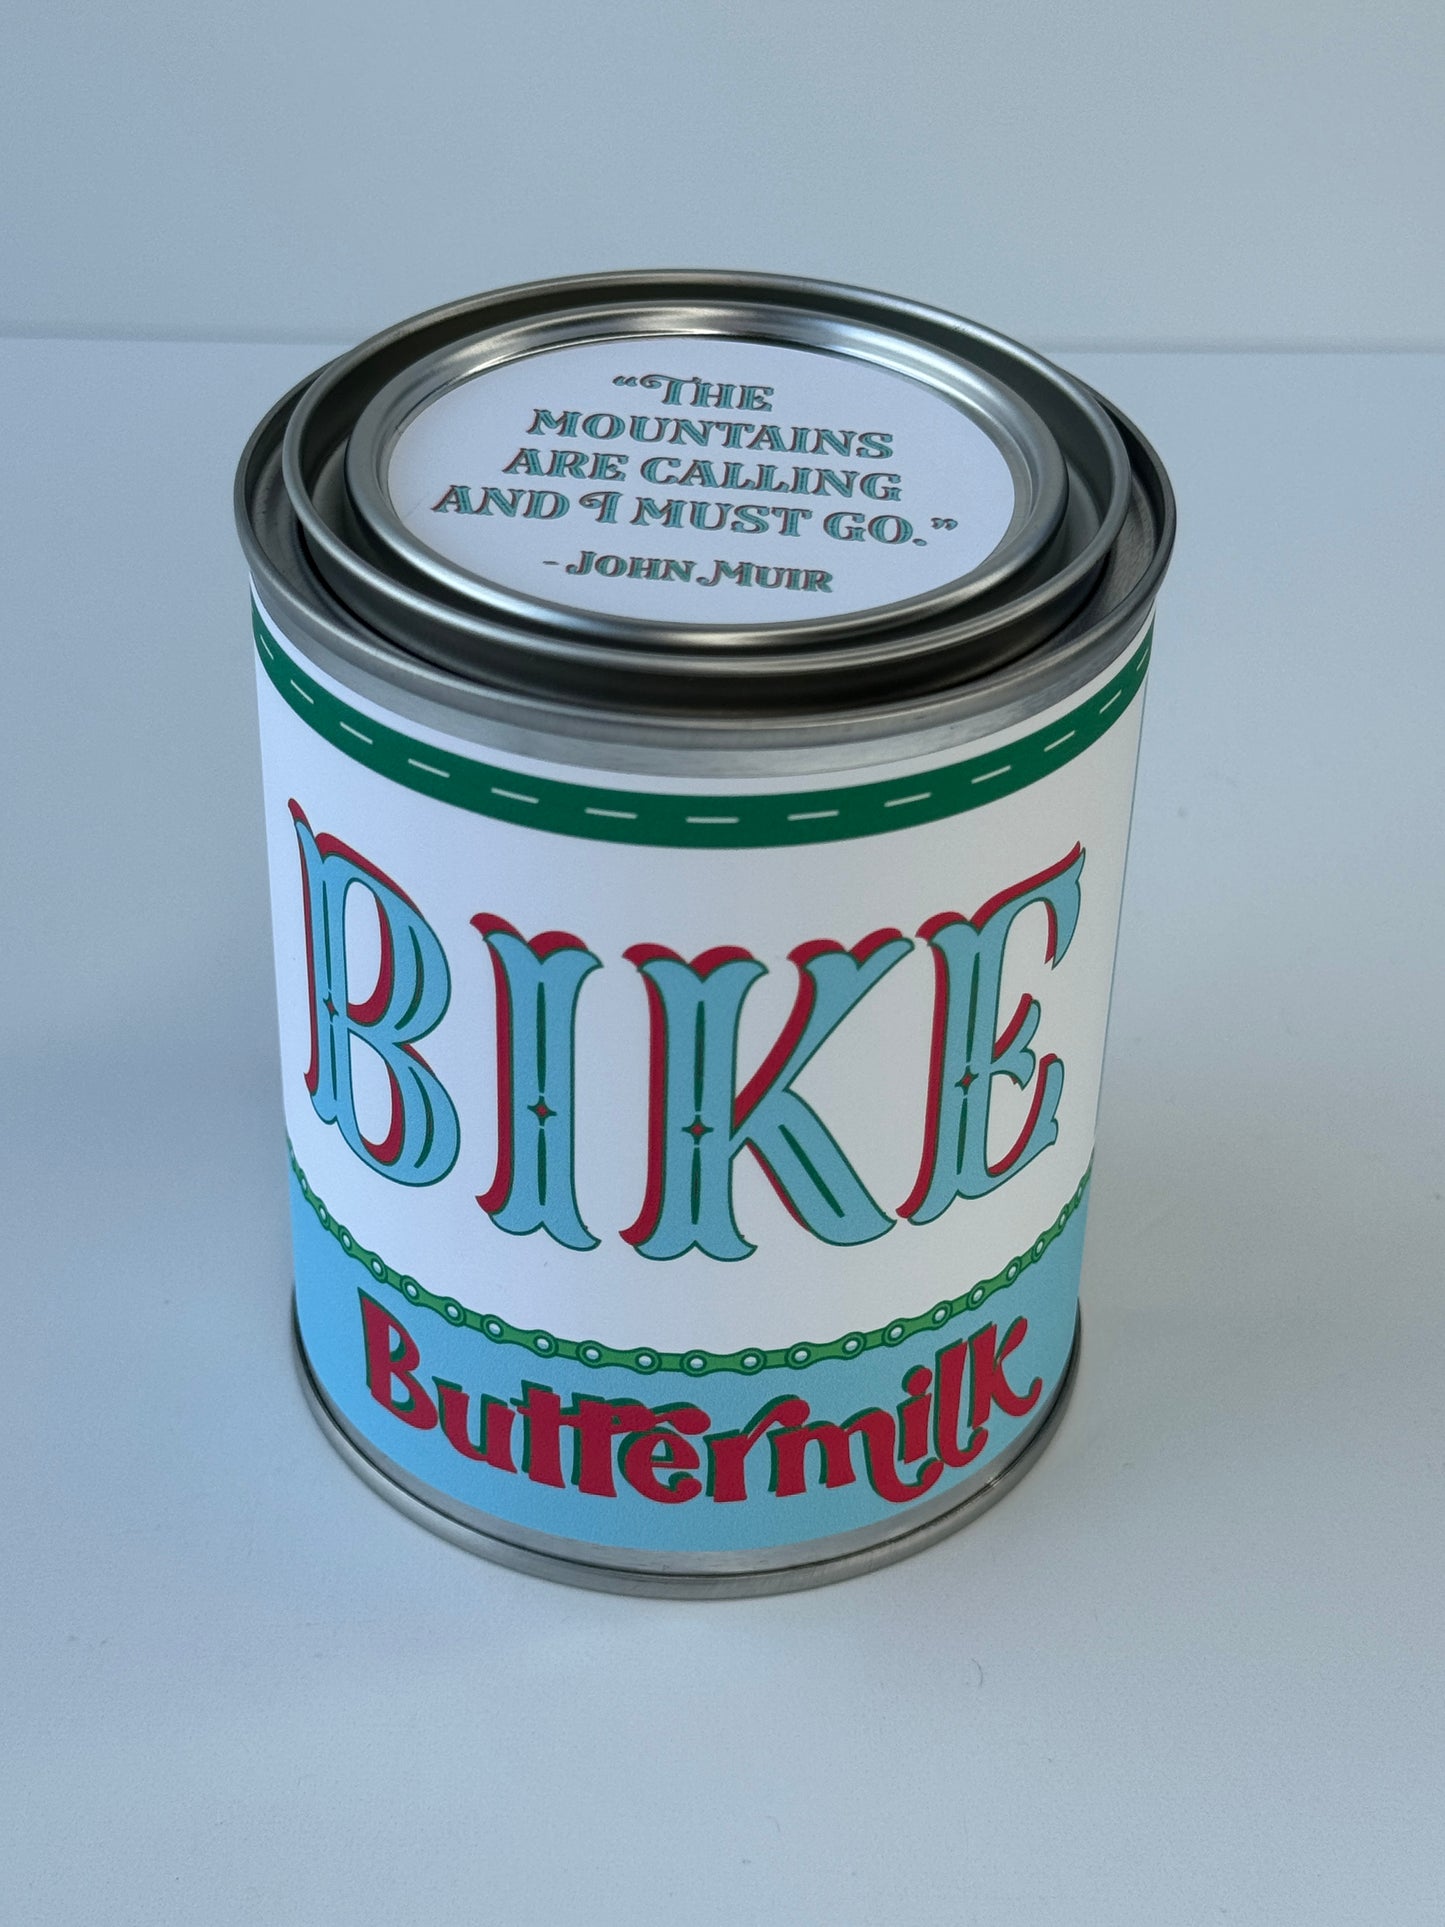 Bike Buttermilk - Paint Tin Candle